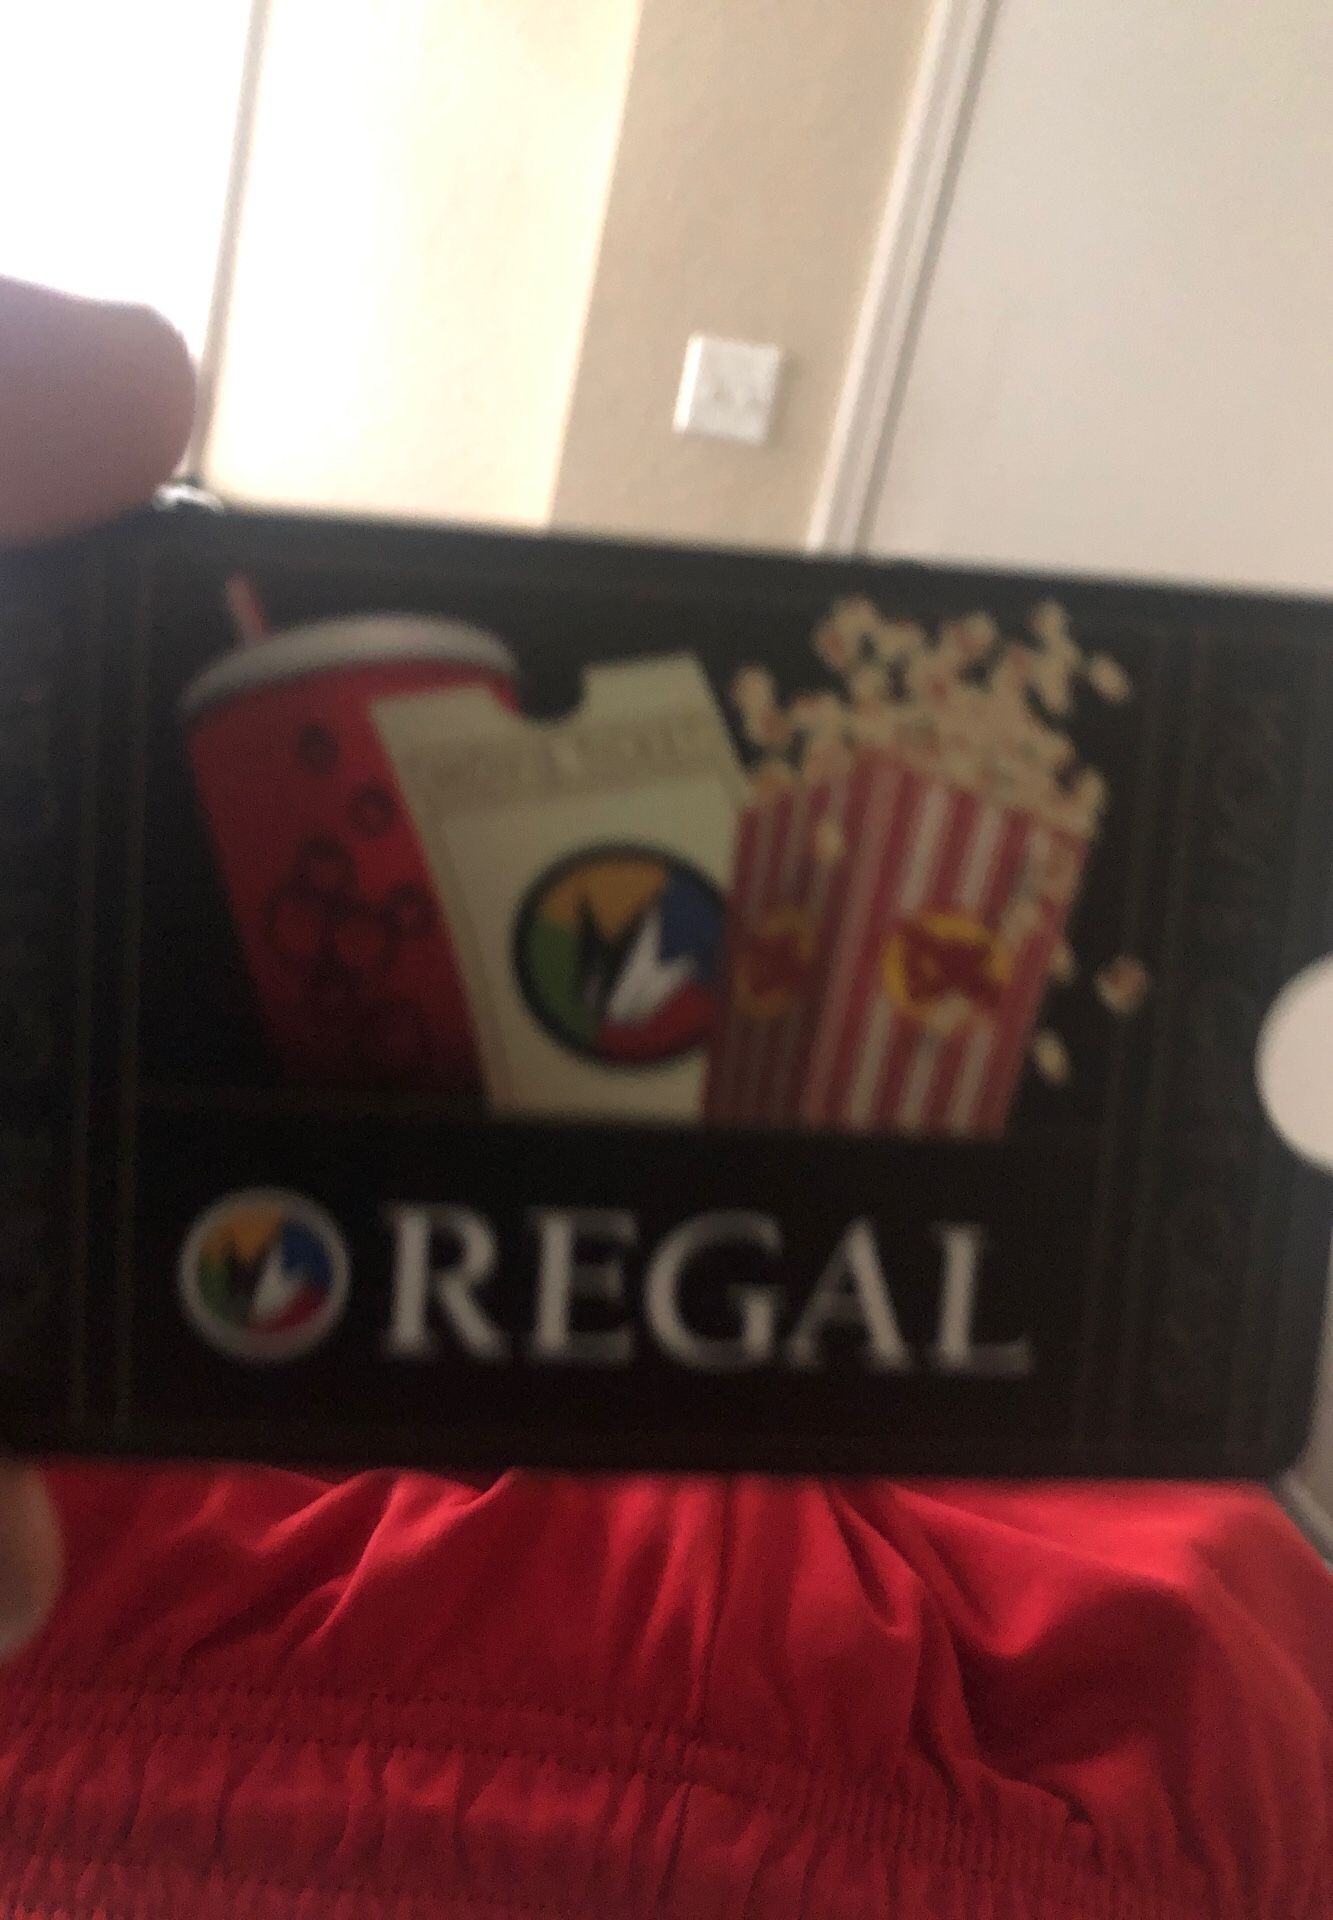 $25 regal cinemas card